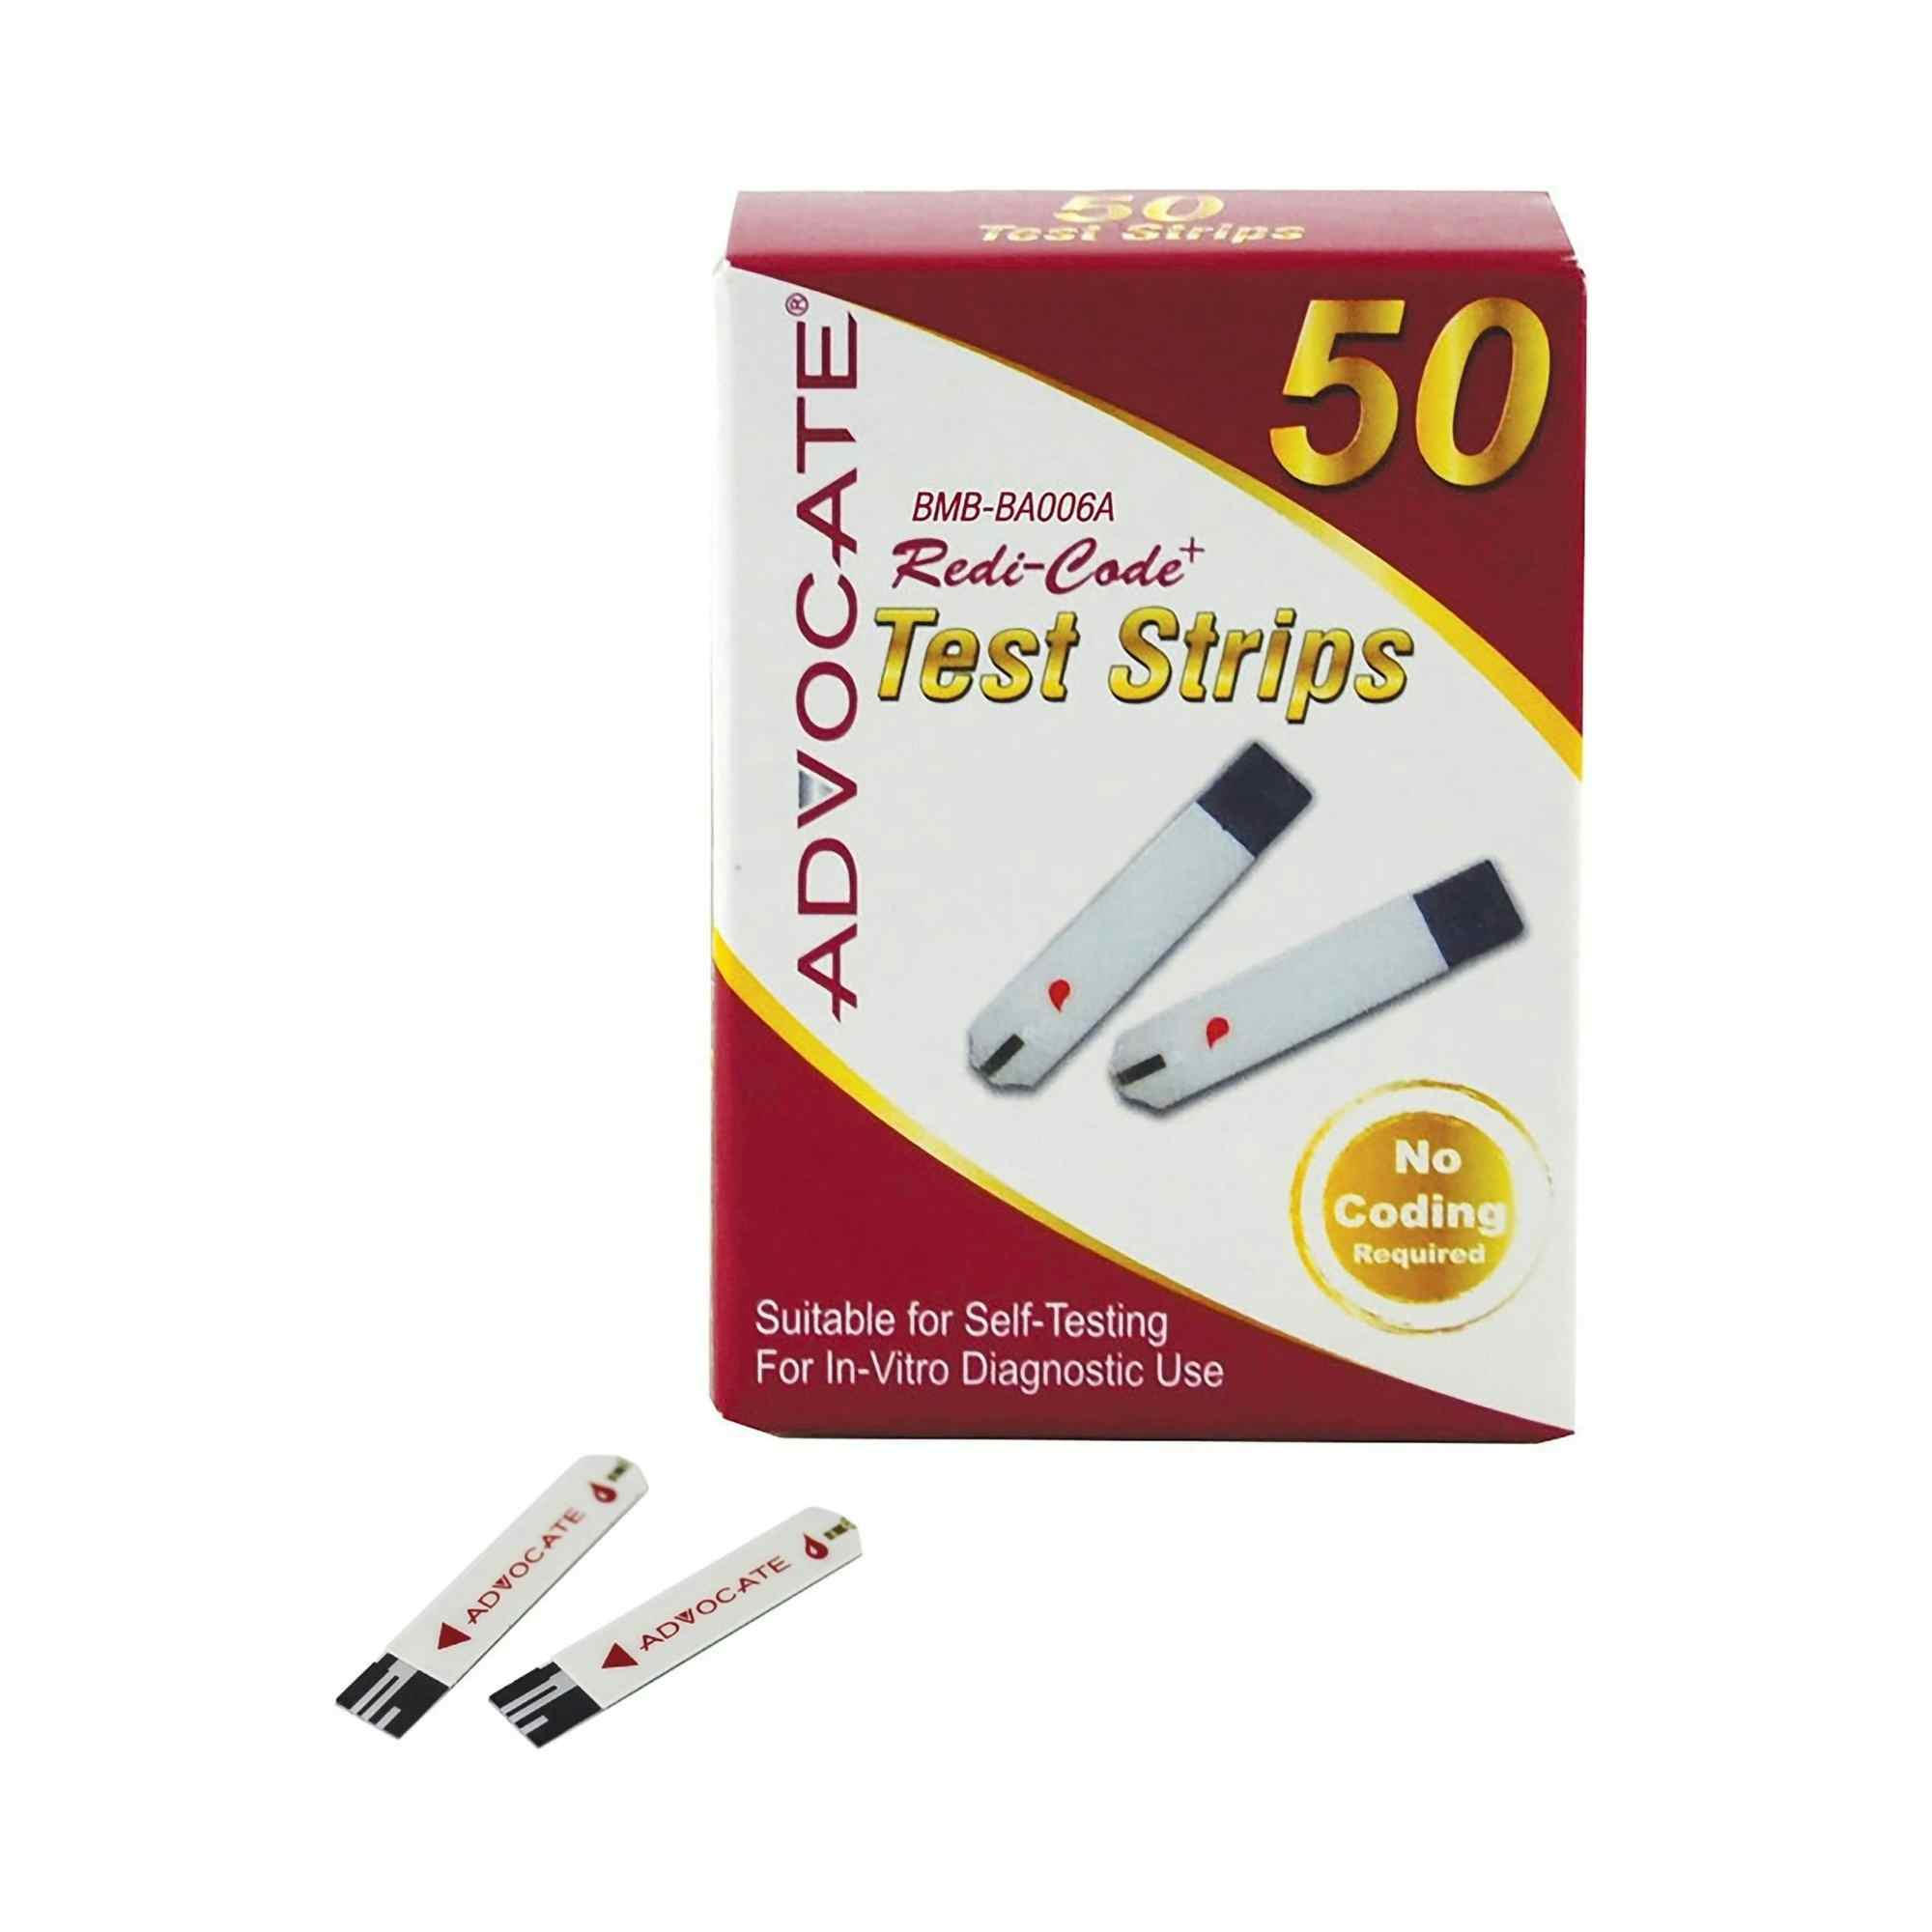 Advocate Redi-Code+ Blood Glucose Test Strips, BMB002, Box of 50